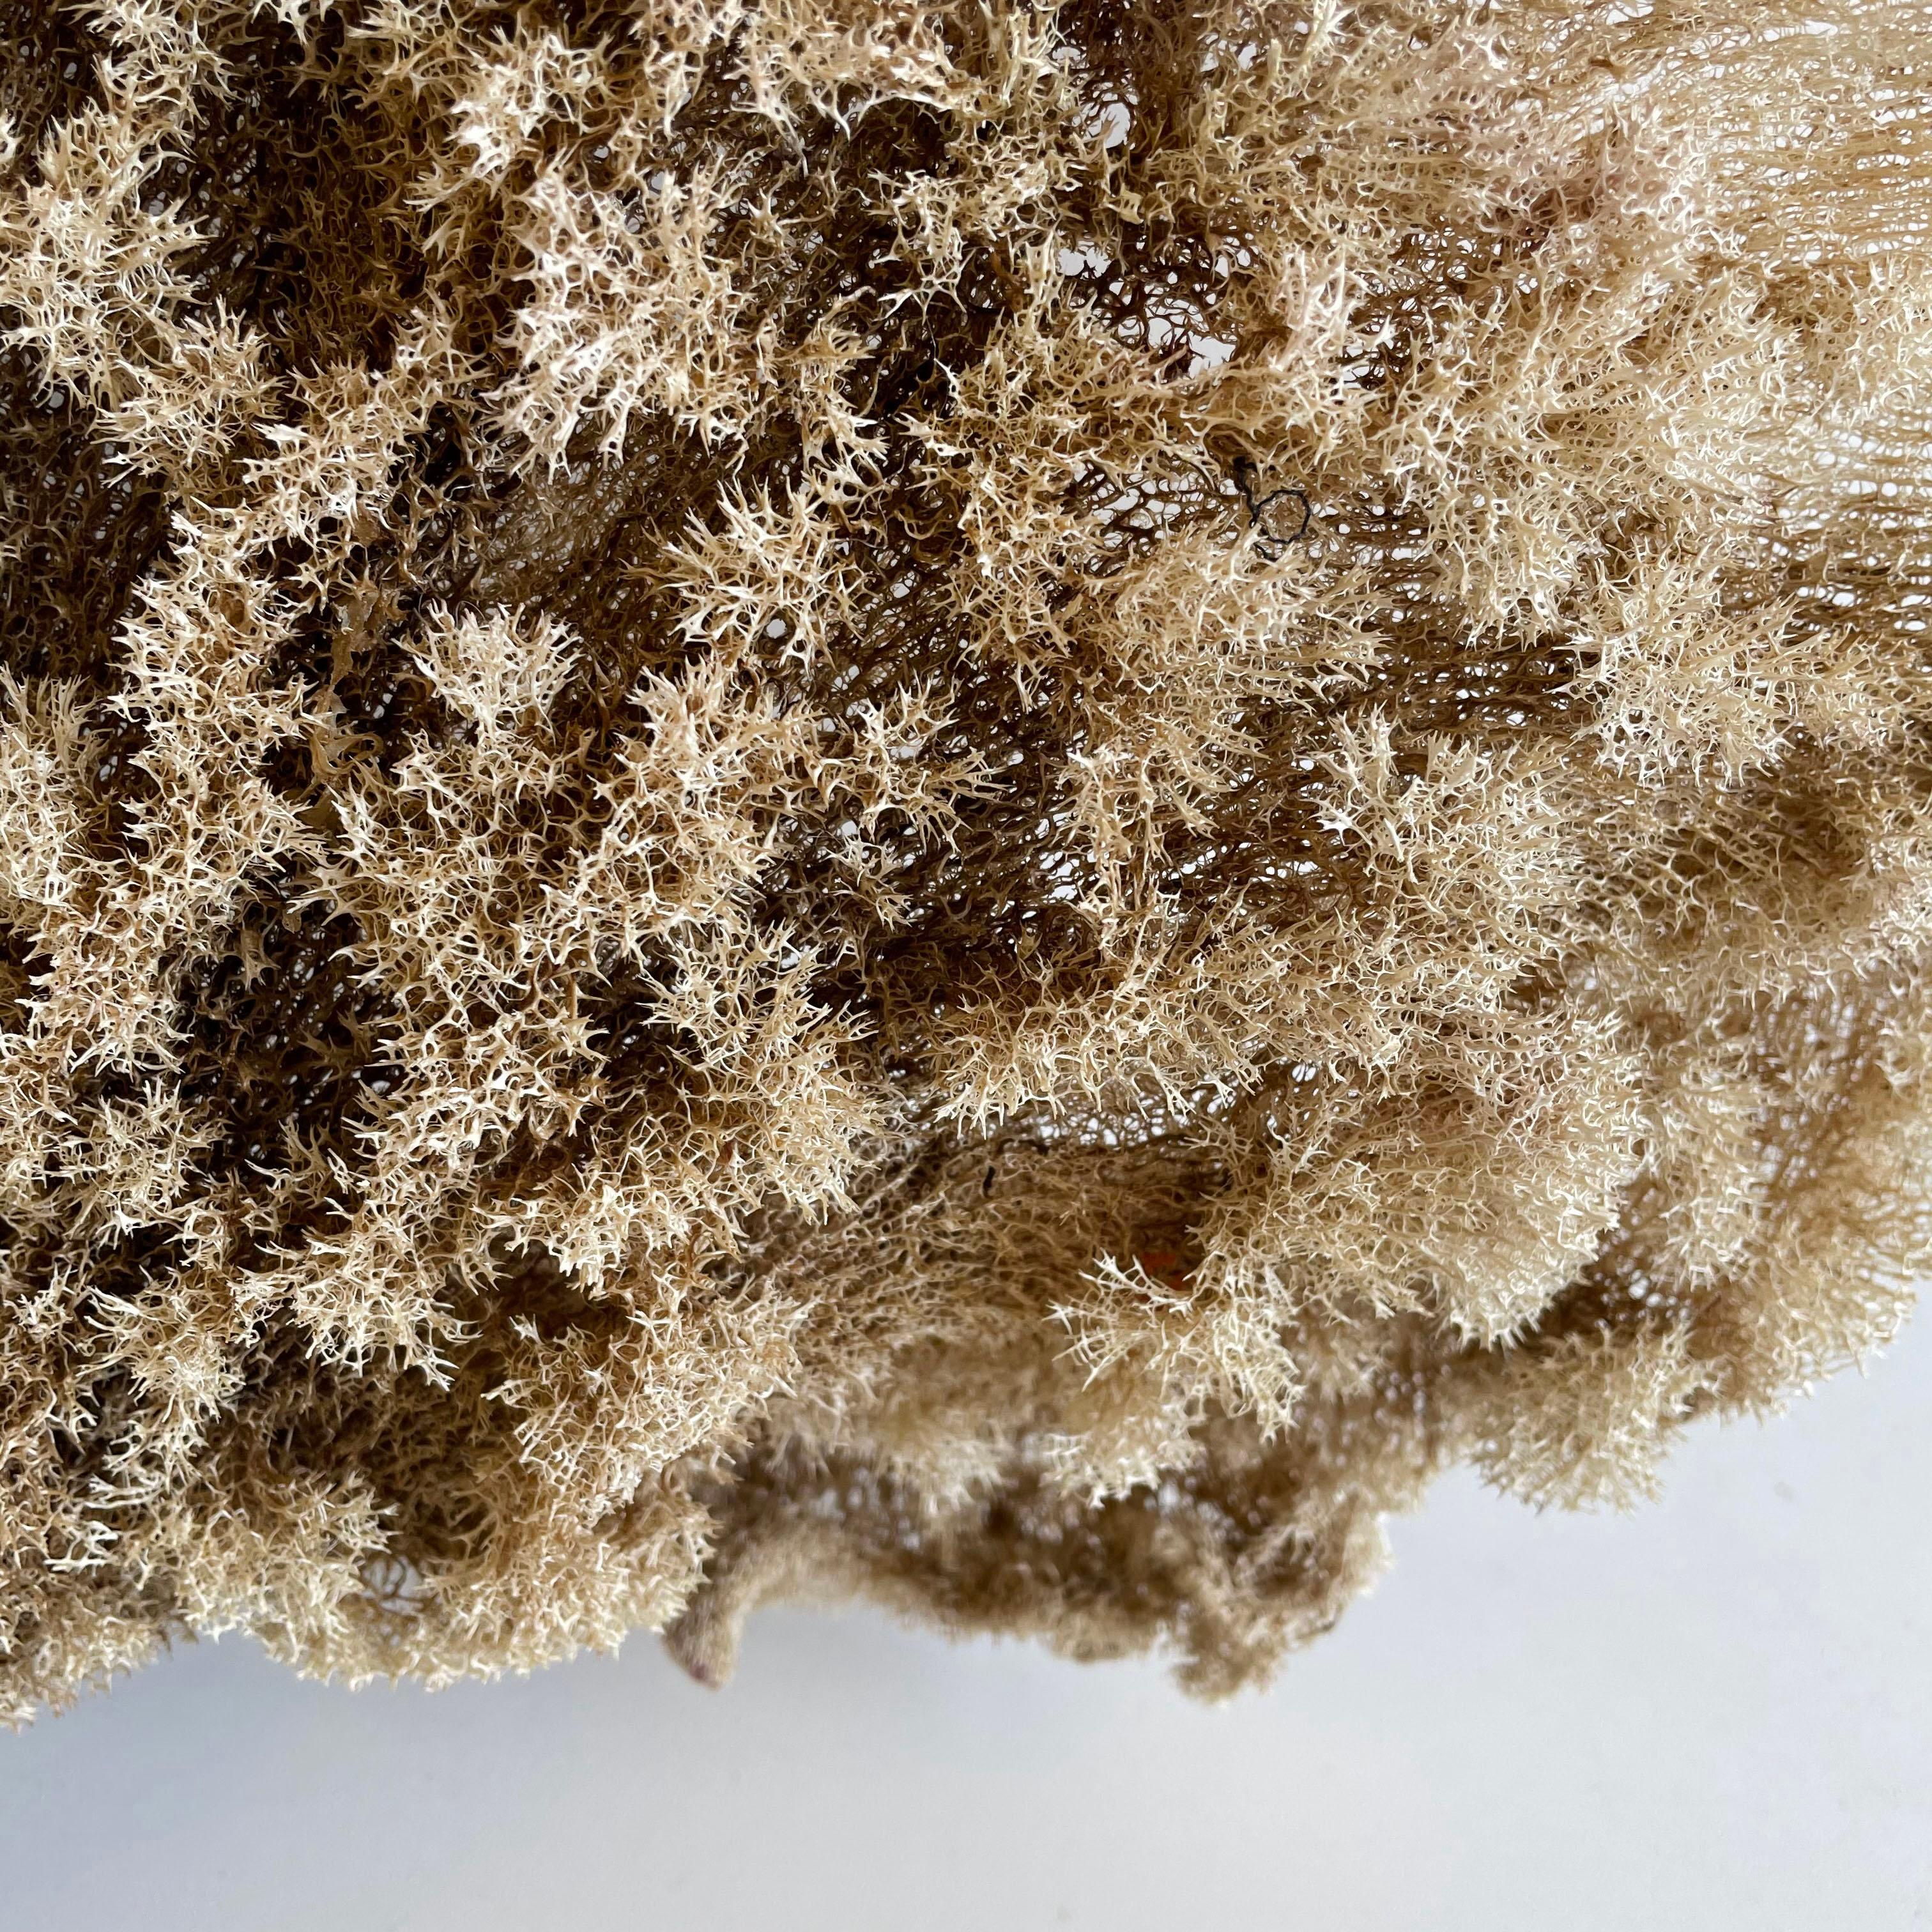 Natural sea sponge
Natural sea sponge in a large fan shape.
Size: 25” x 15” x 3”.